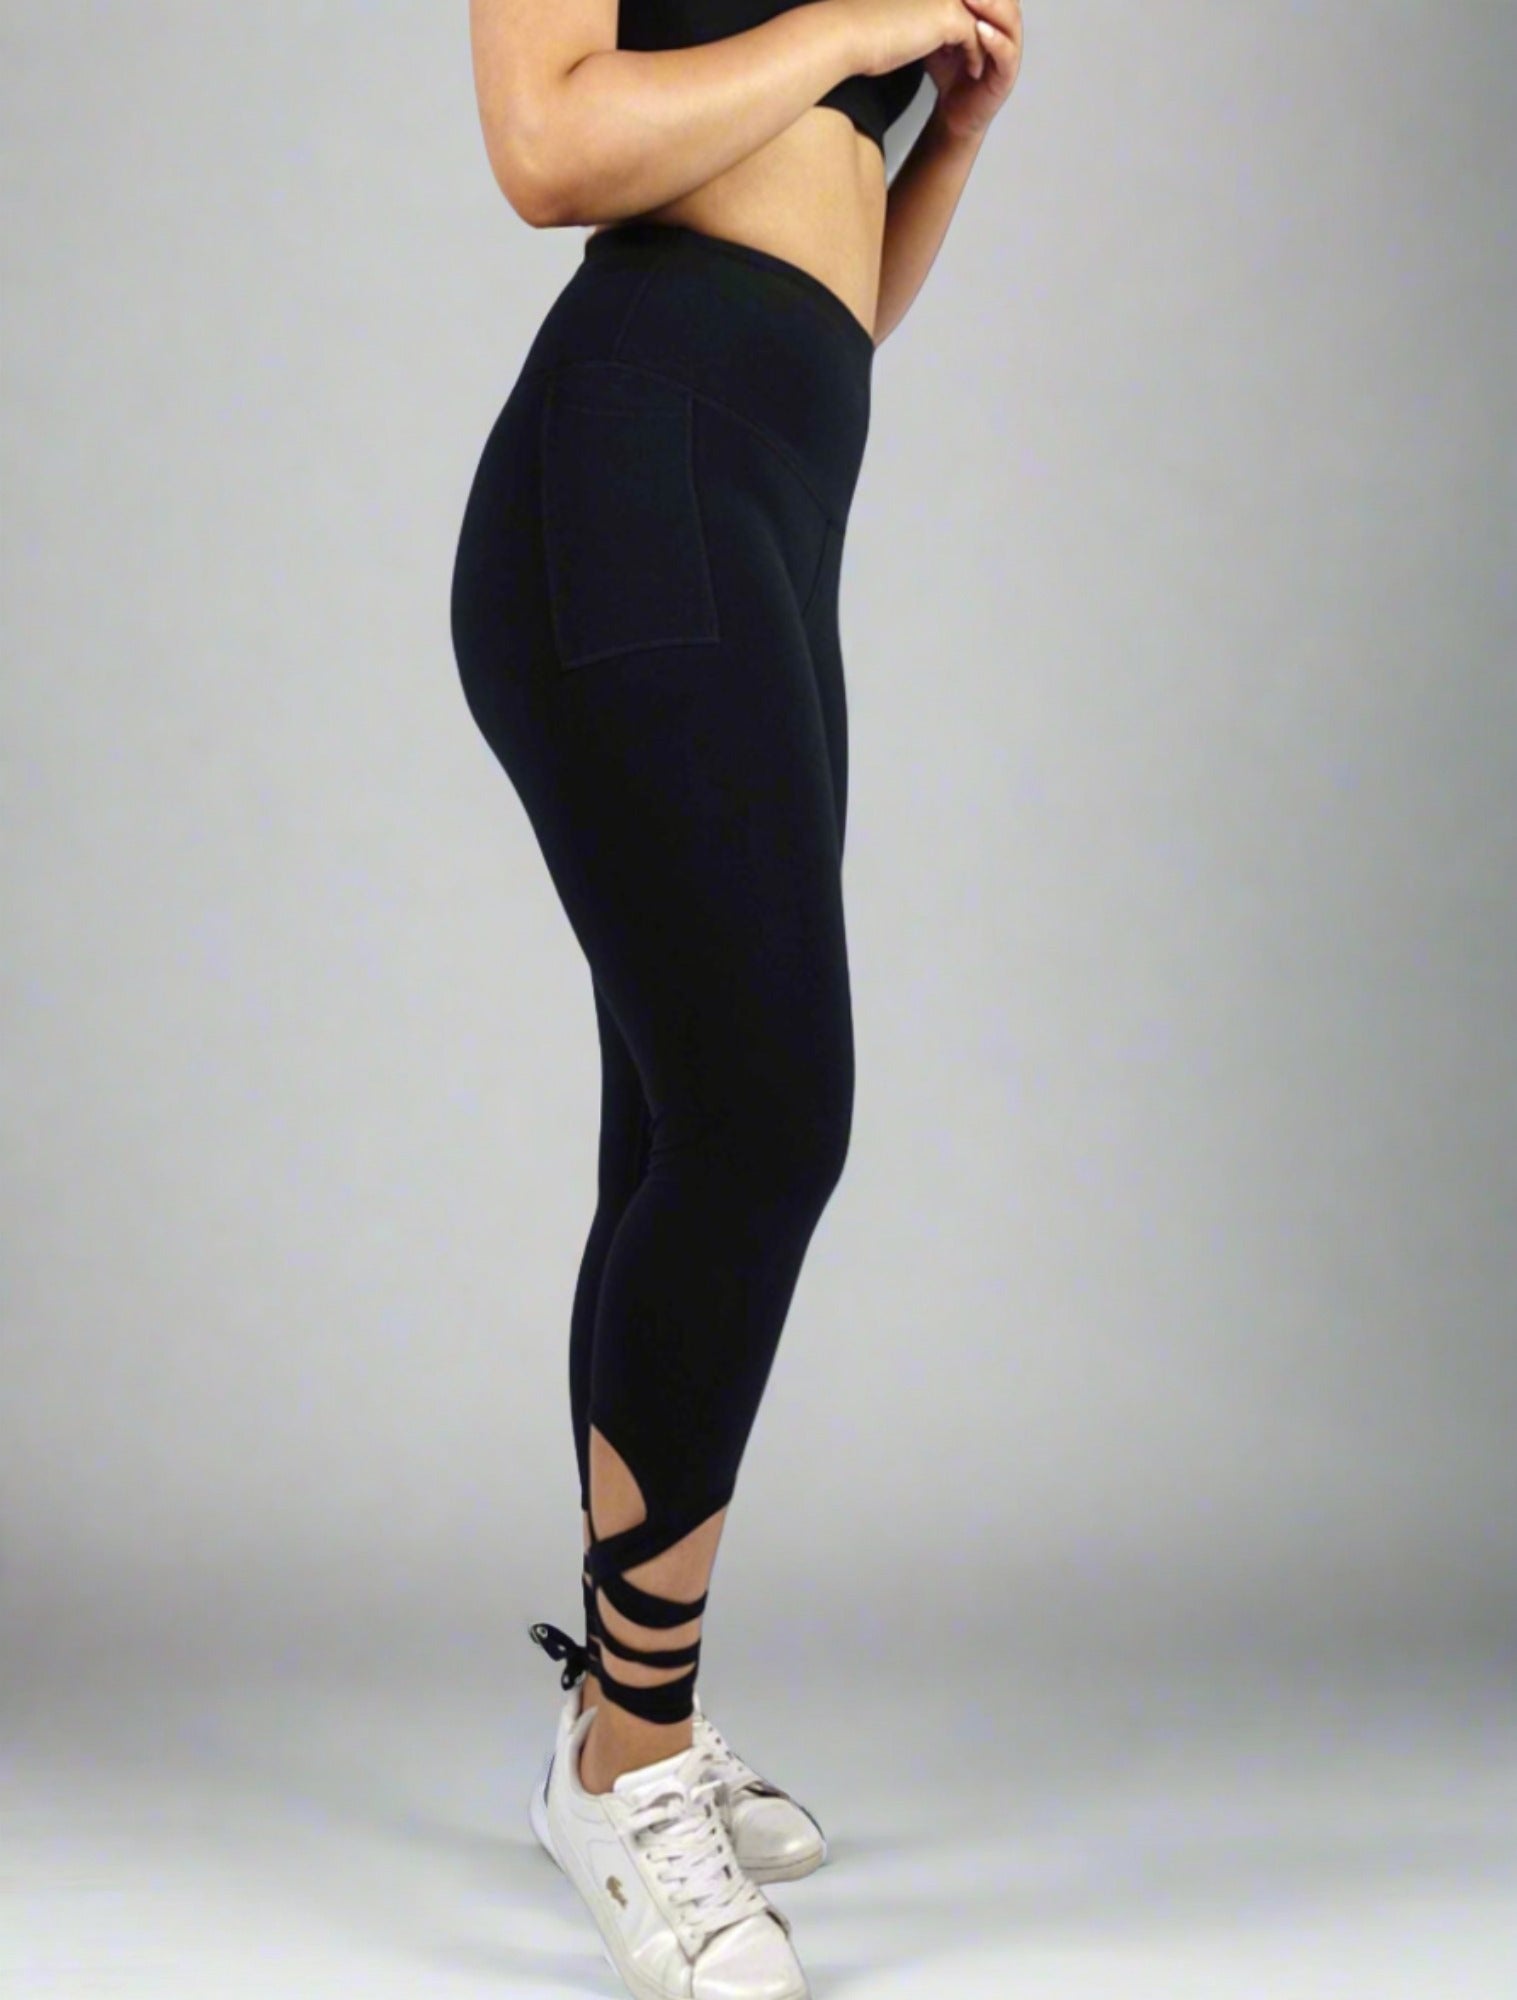 Women's Activewear Criss Cross Lace-up Mesh Side Workout Leggings, Black